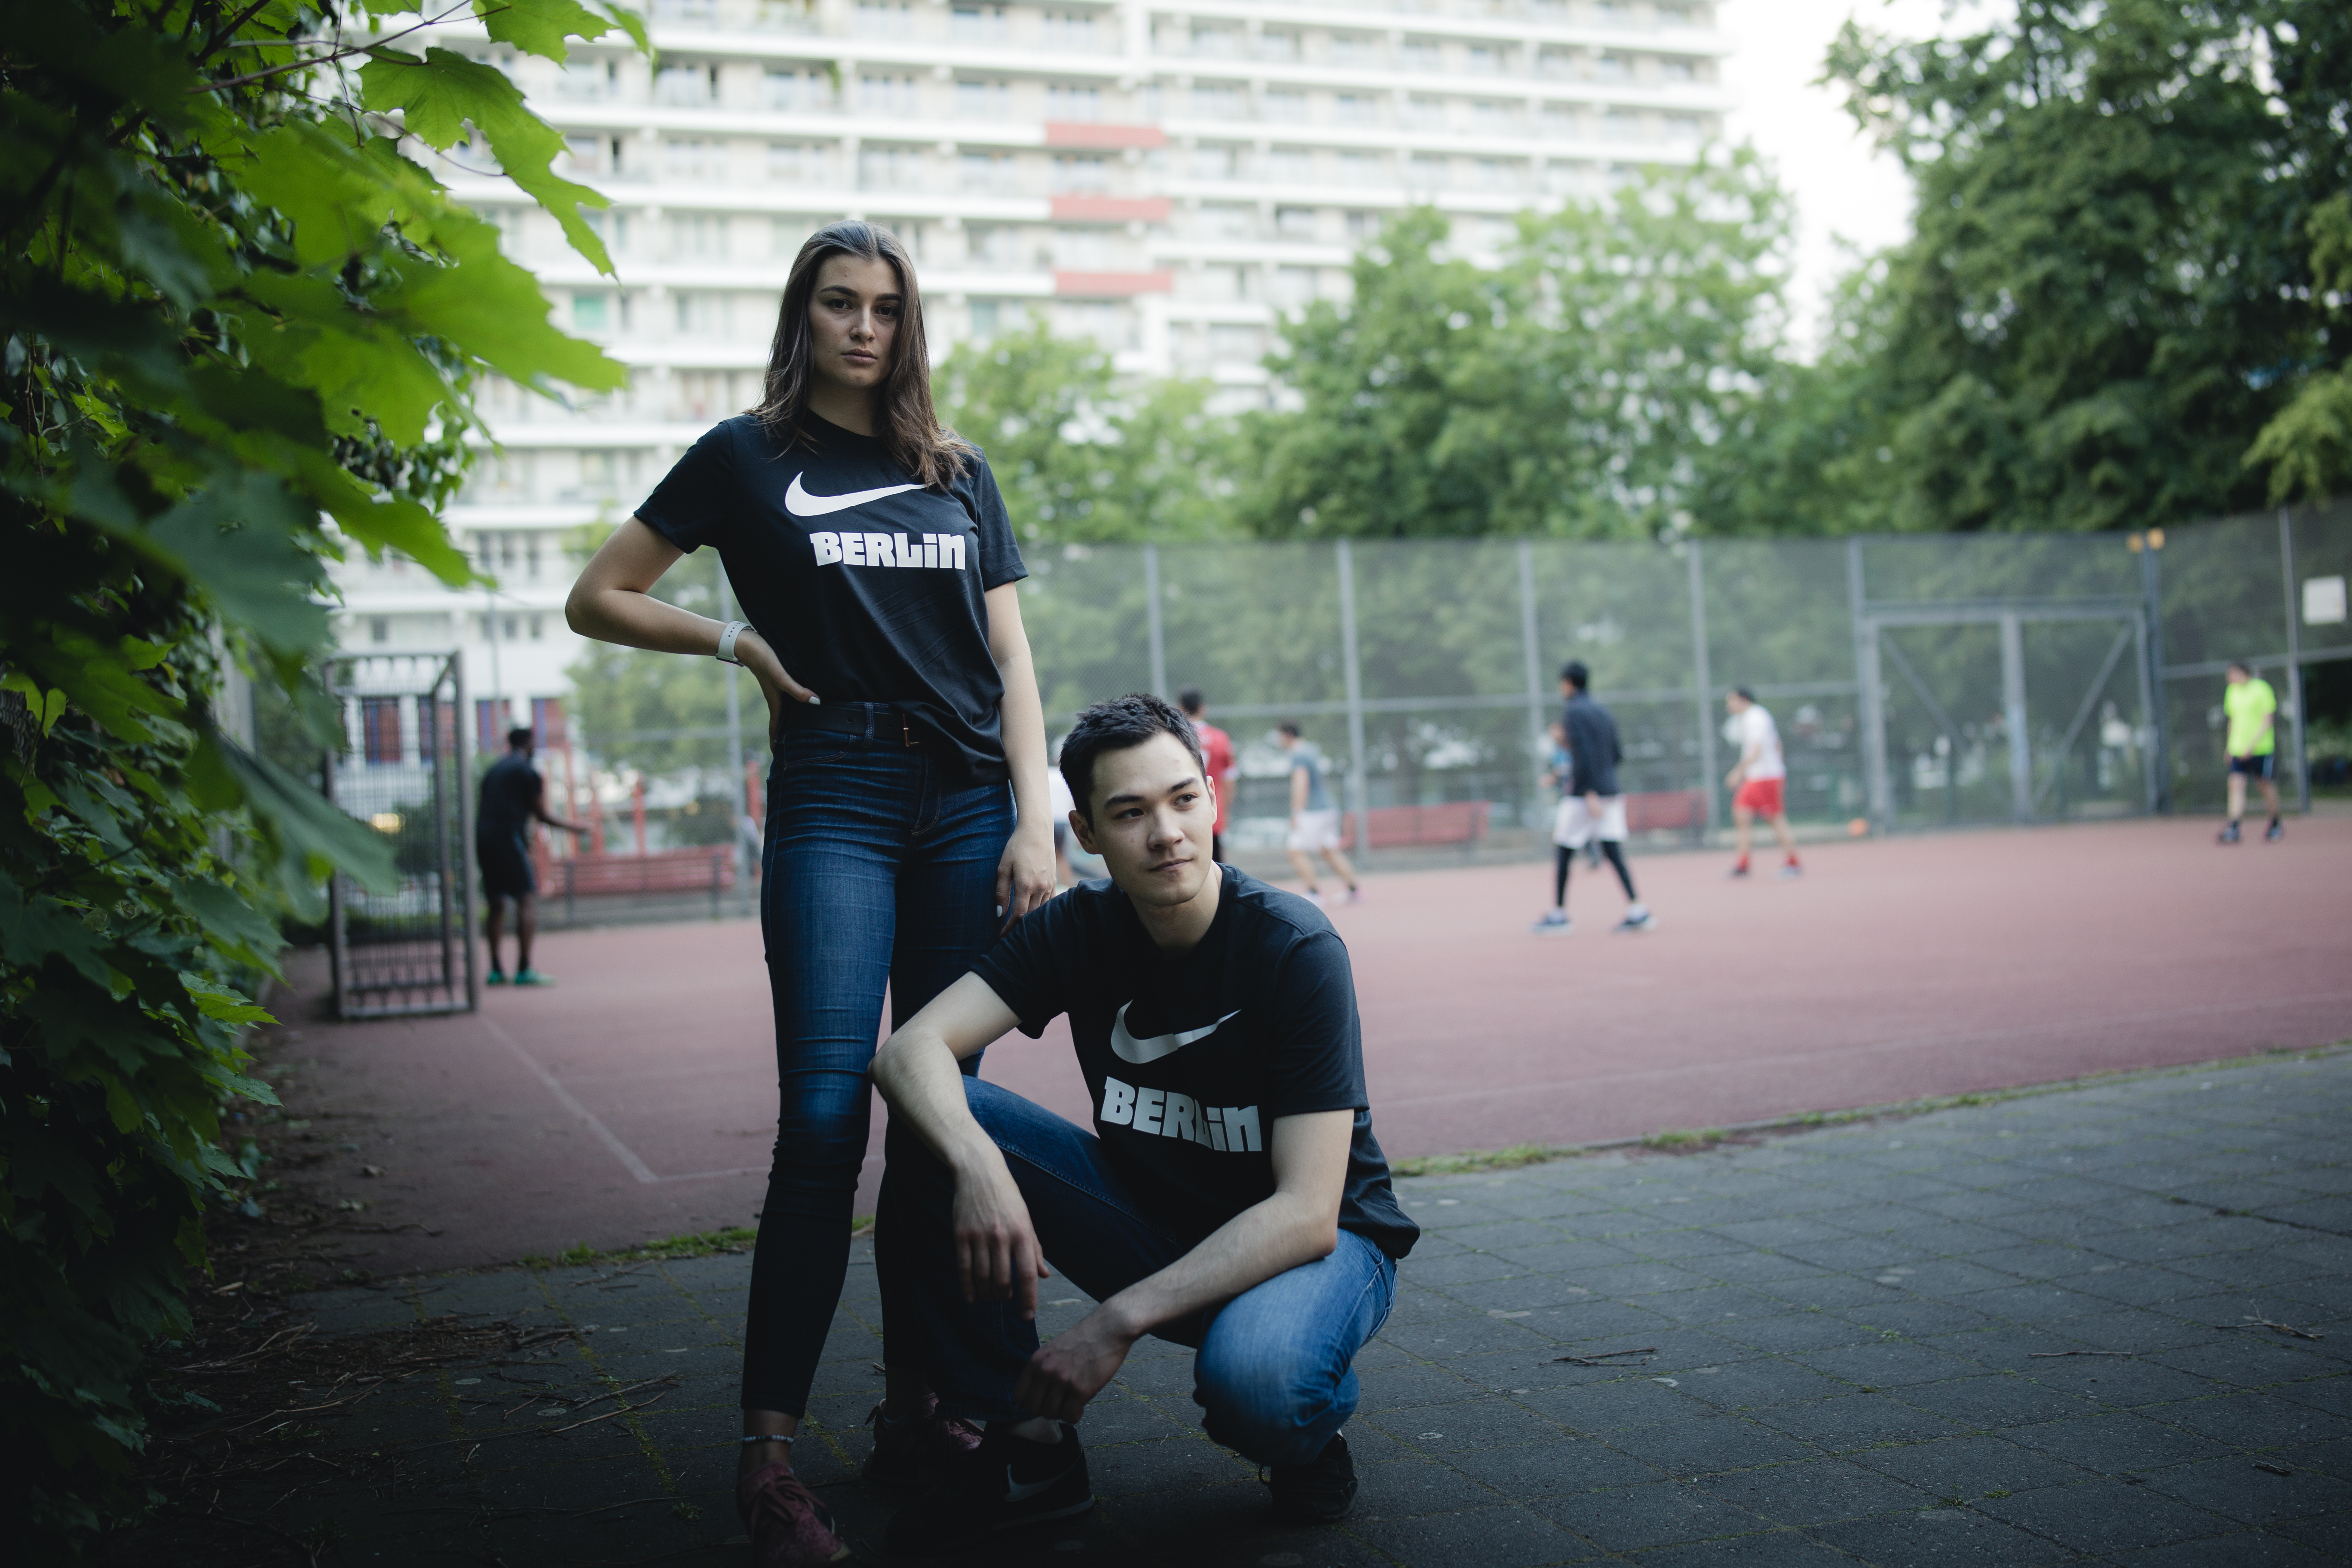 Zwei Hertha-Fans mit dem Nike Shirt 'Berlin'.